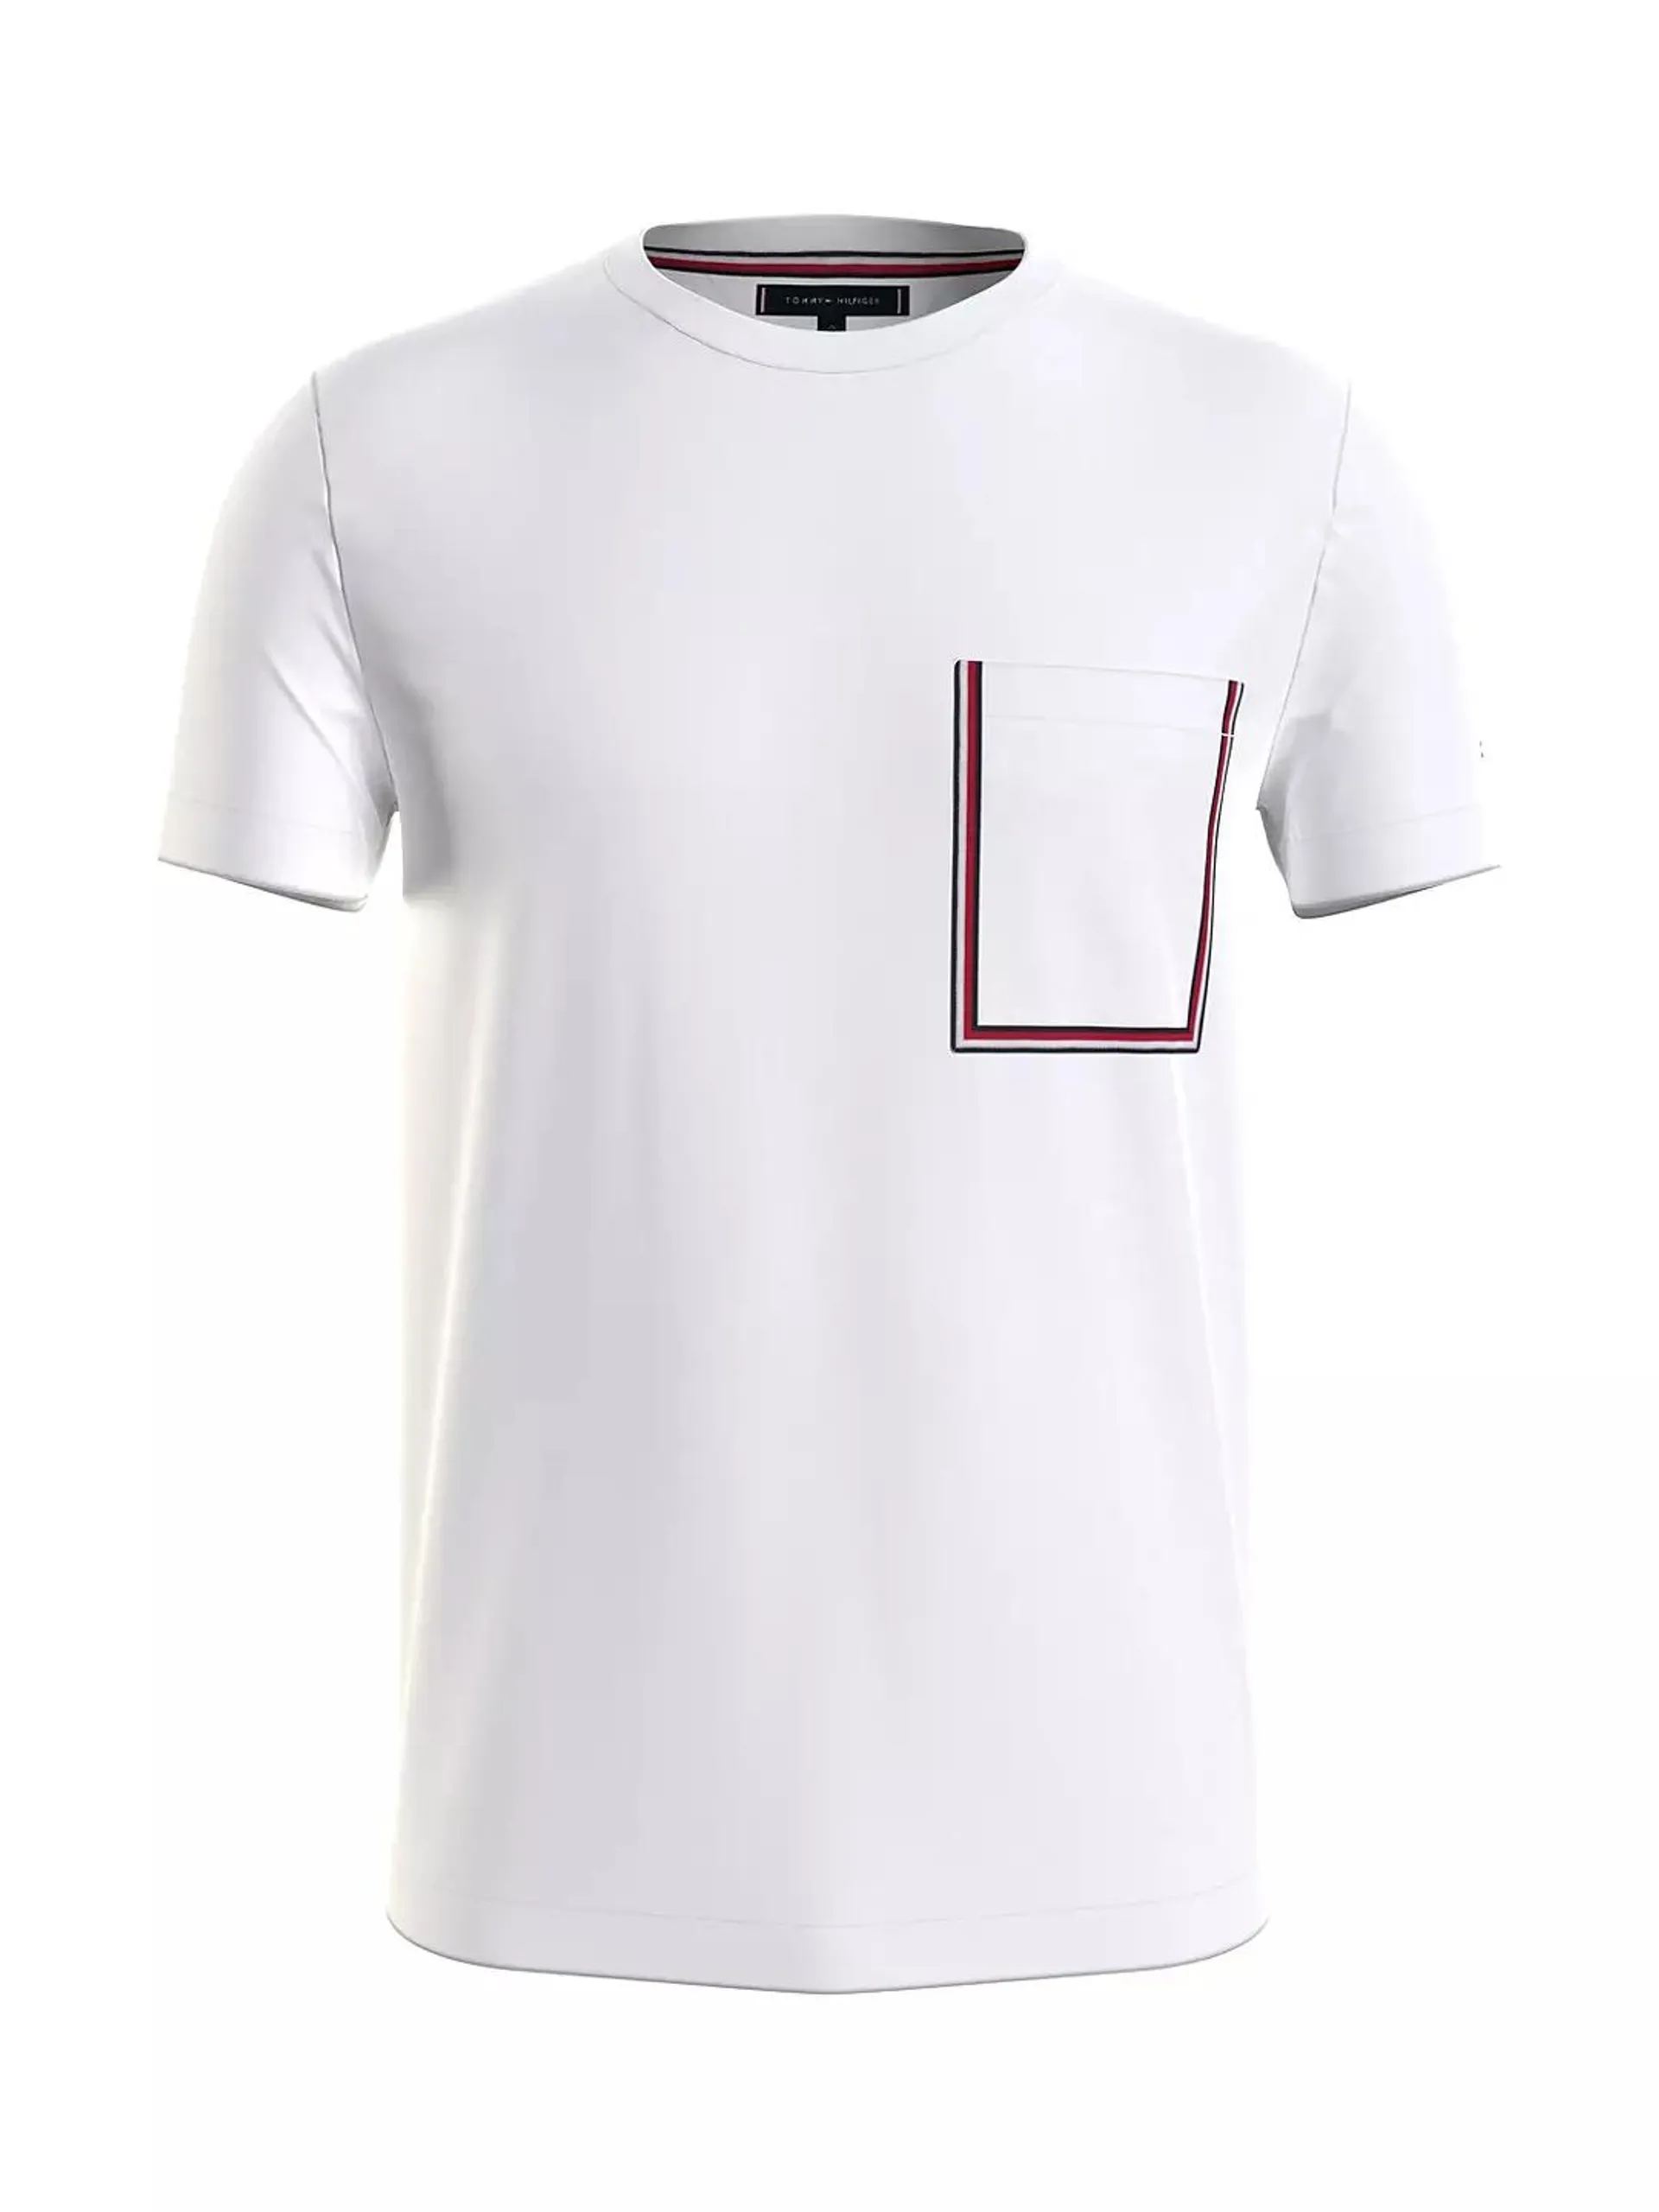 Tommy Hilfiger Pocket T-Shirt, White